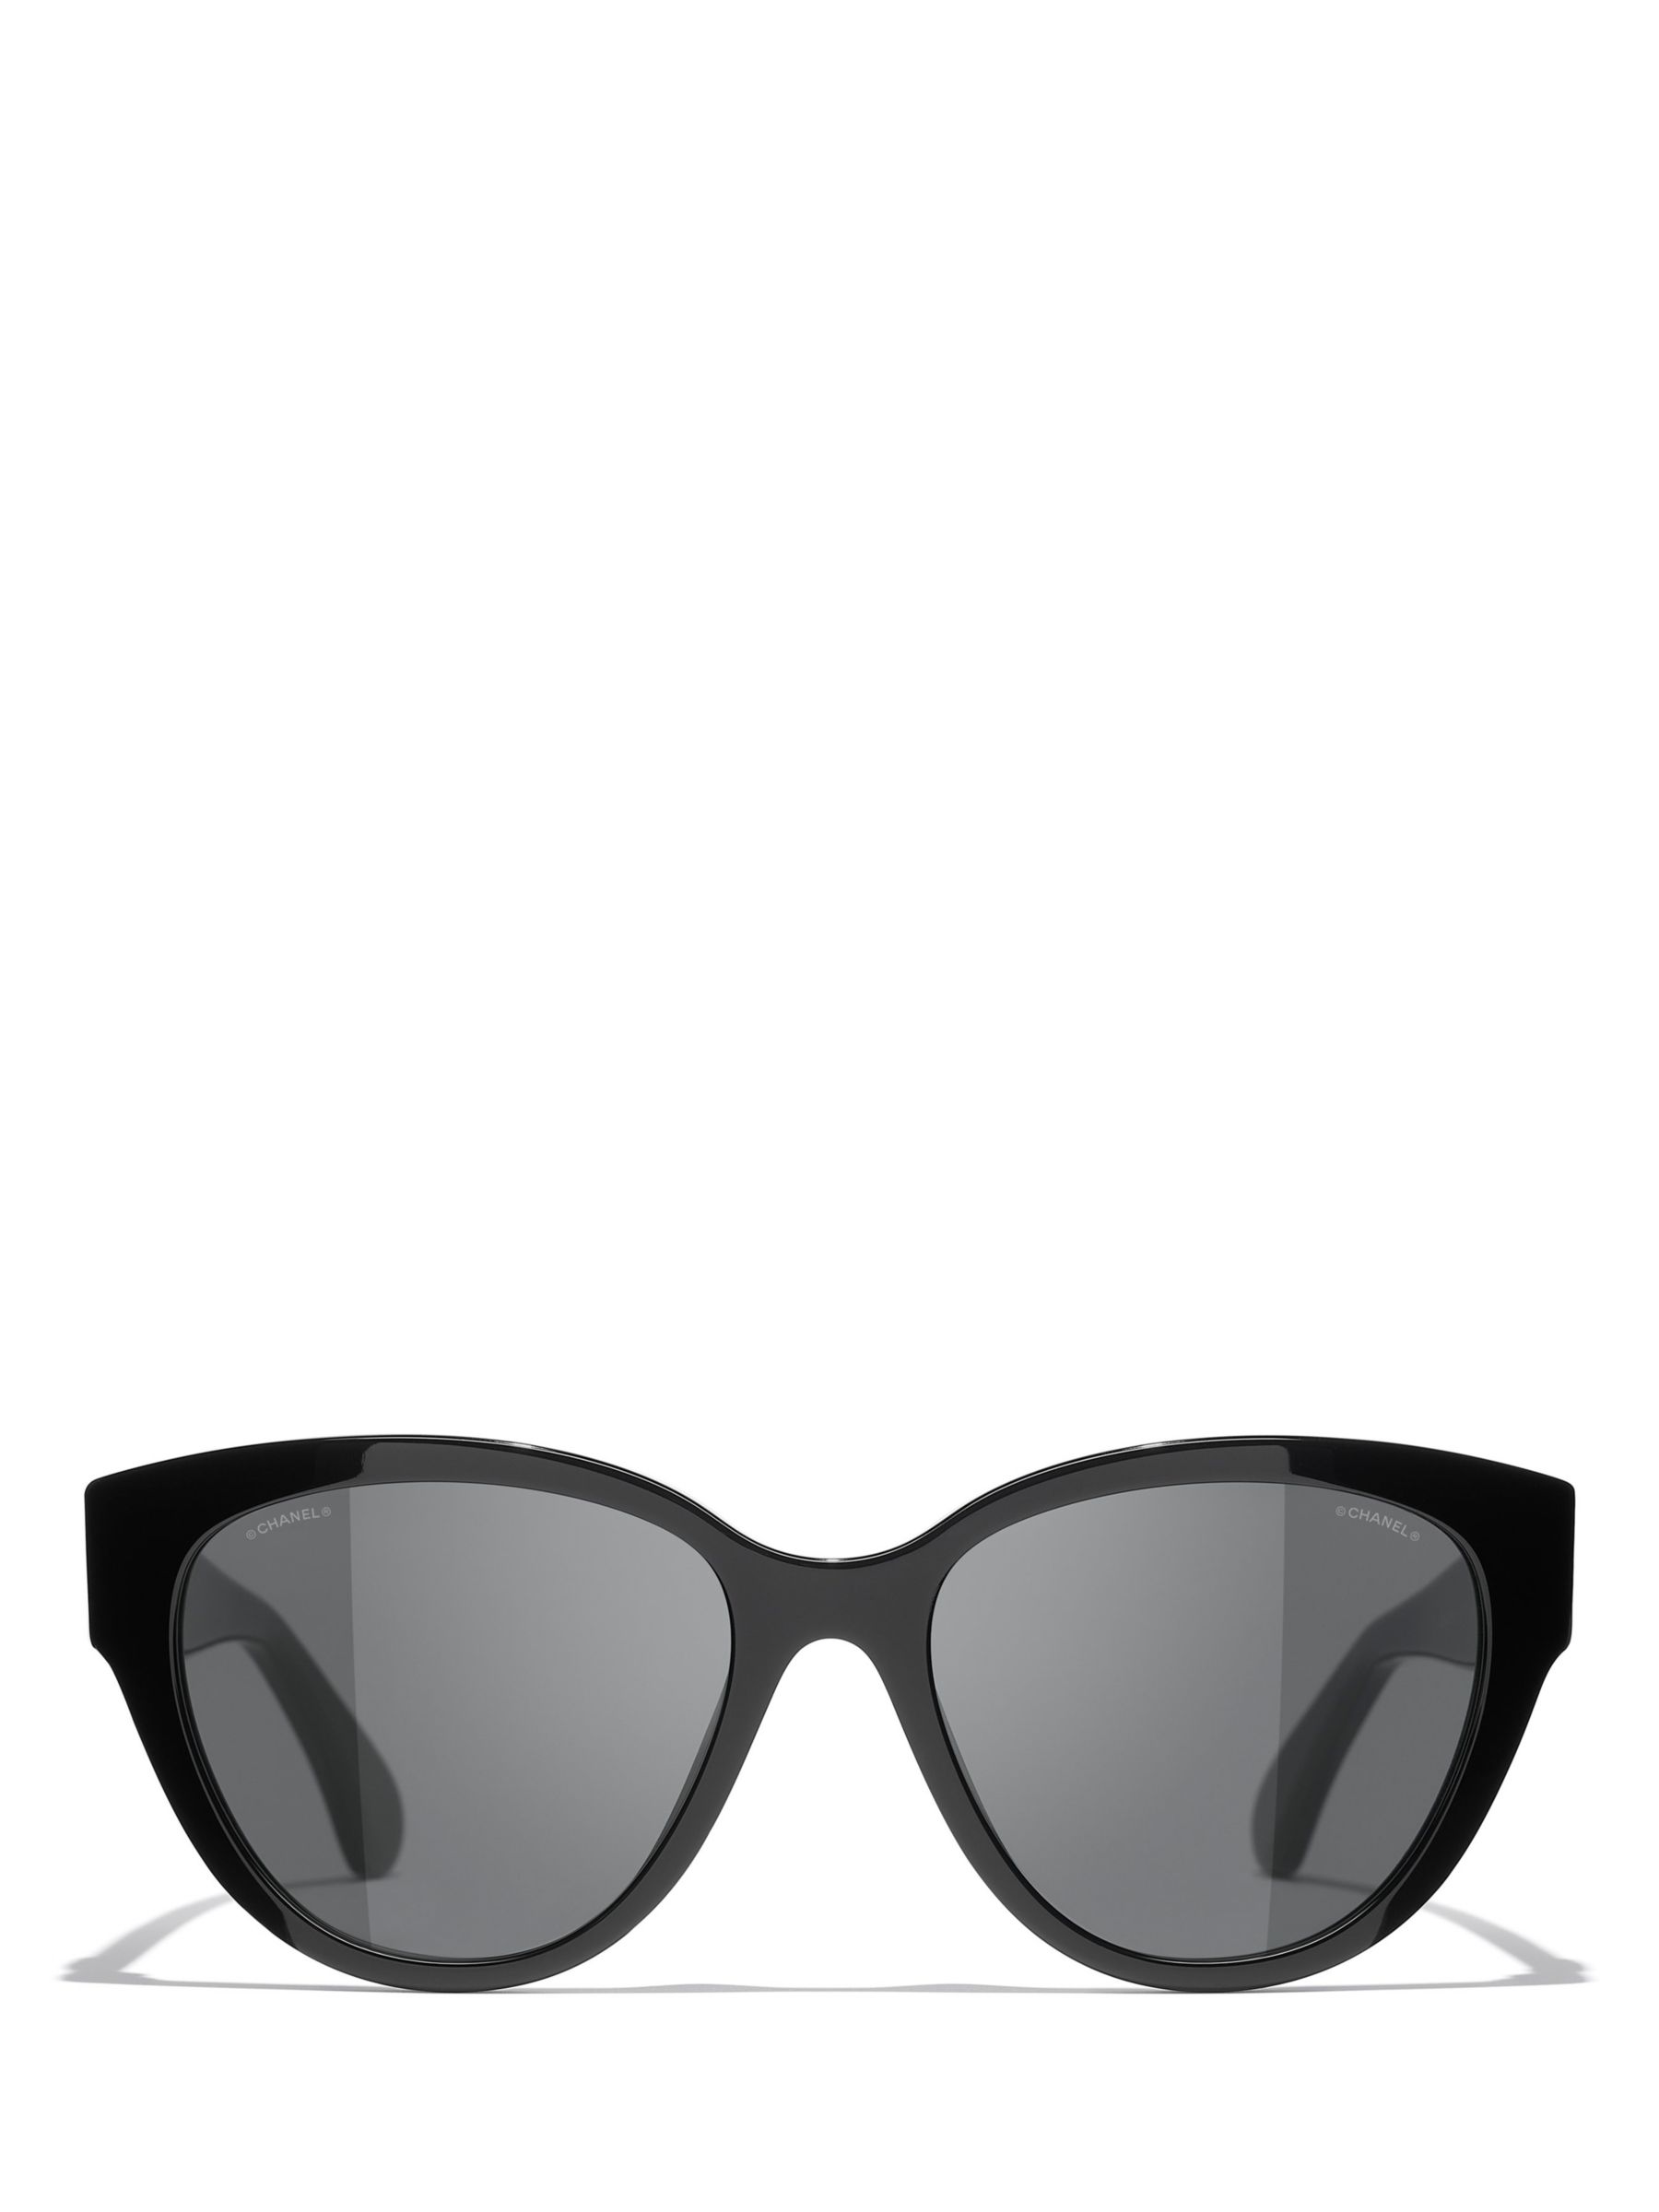 CHANEL CH5477 Women's Cat's Eye Sunglasses, Black/Grey at John